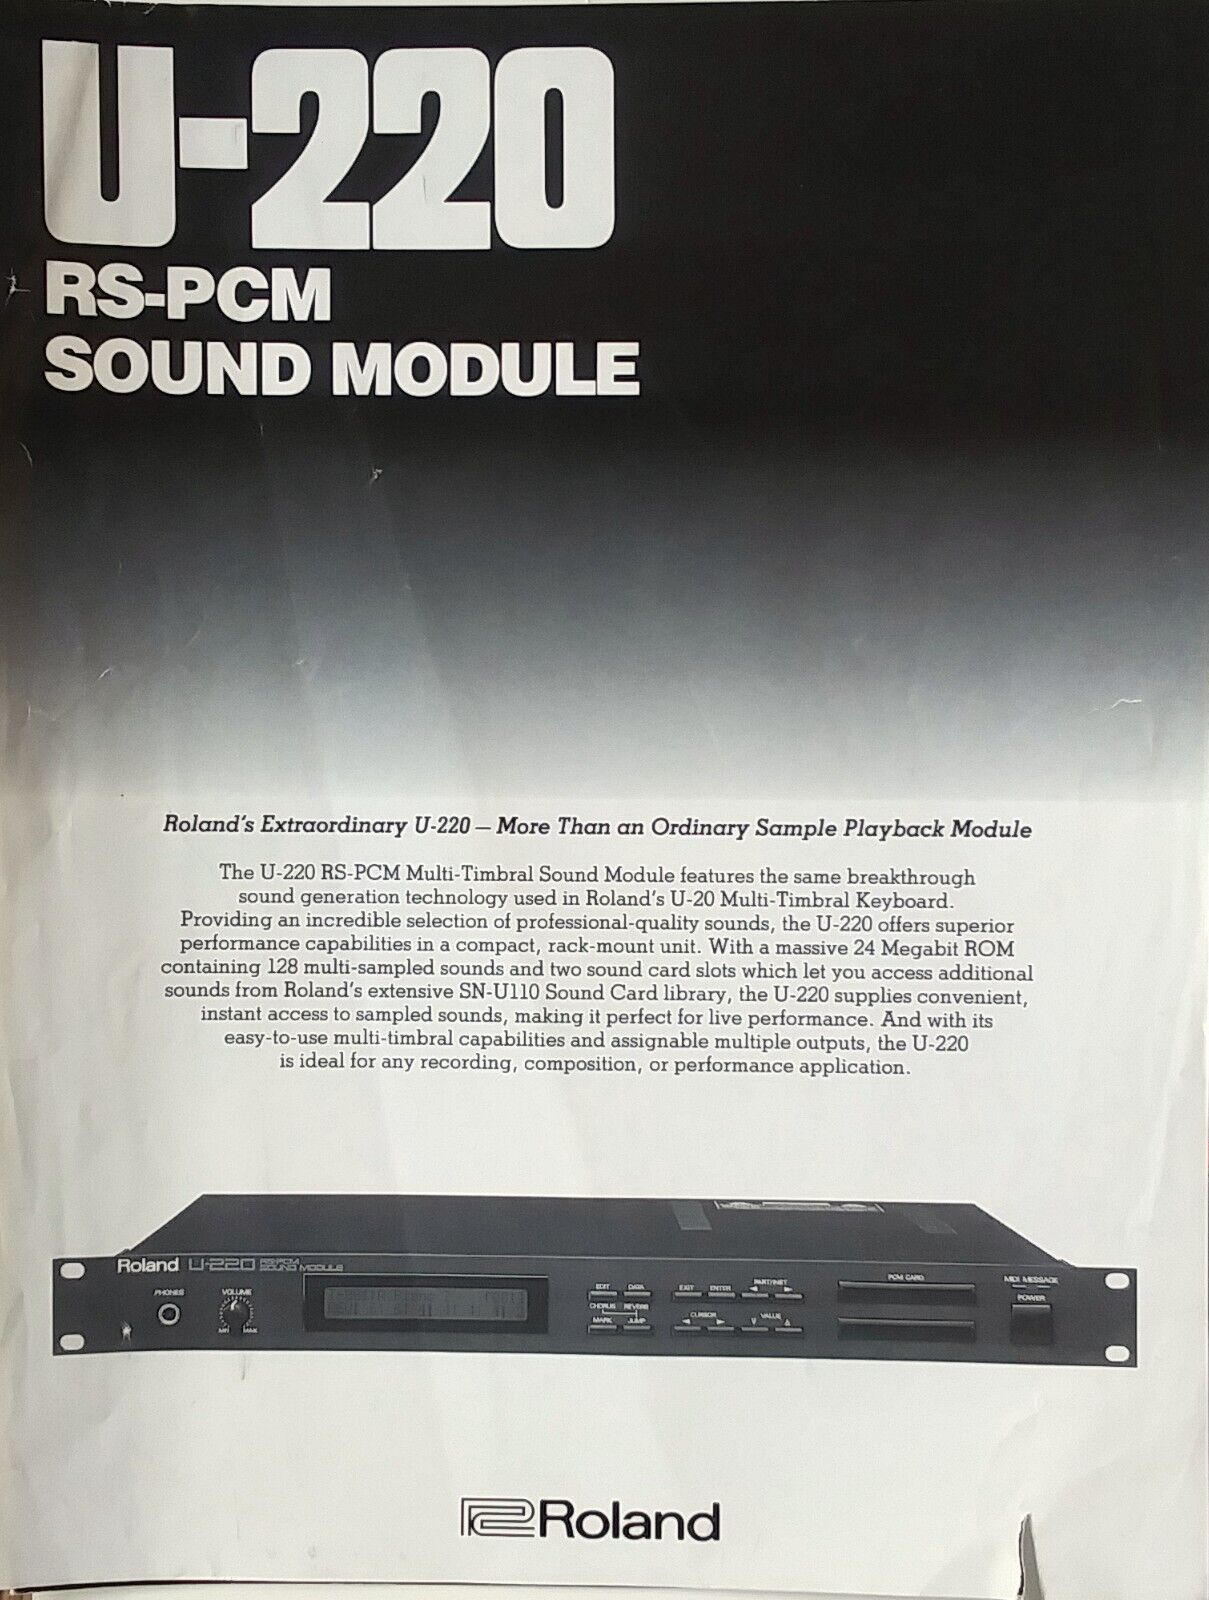 Roland U-220 Synthesizer Rack Mount MIDI Sound Module Brochure, Original Sheet.